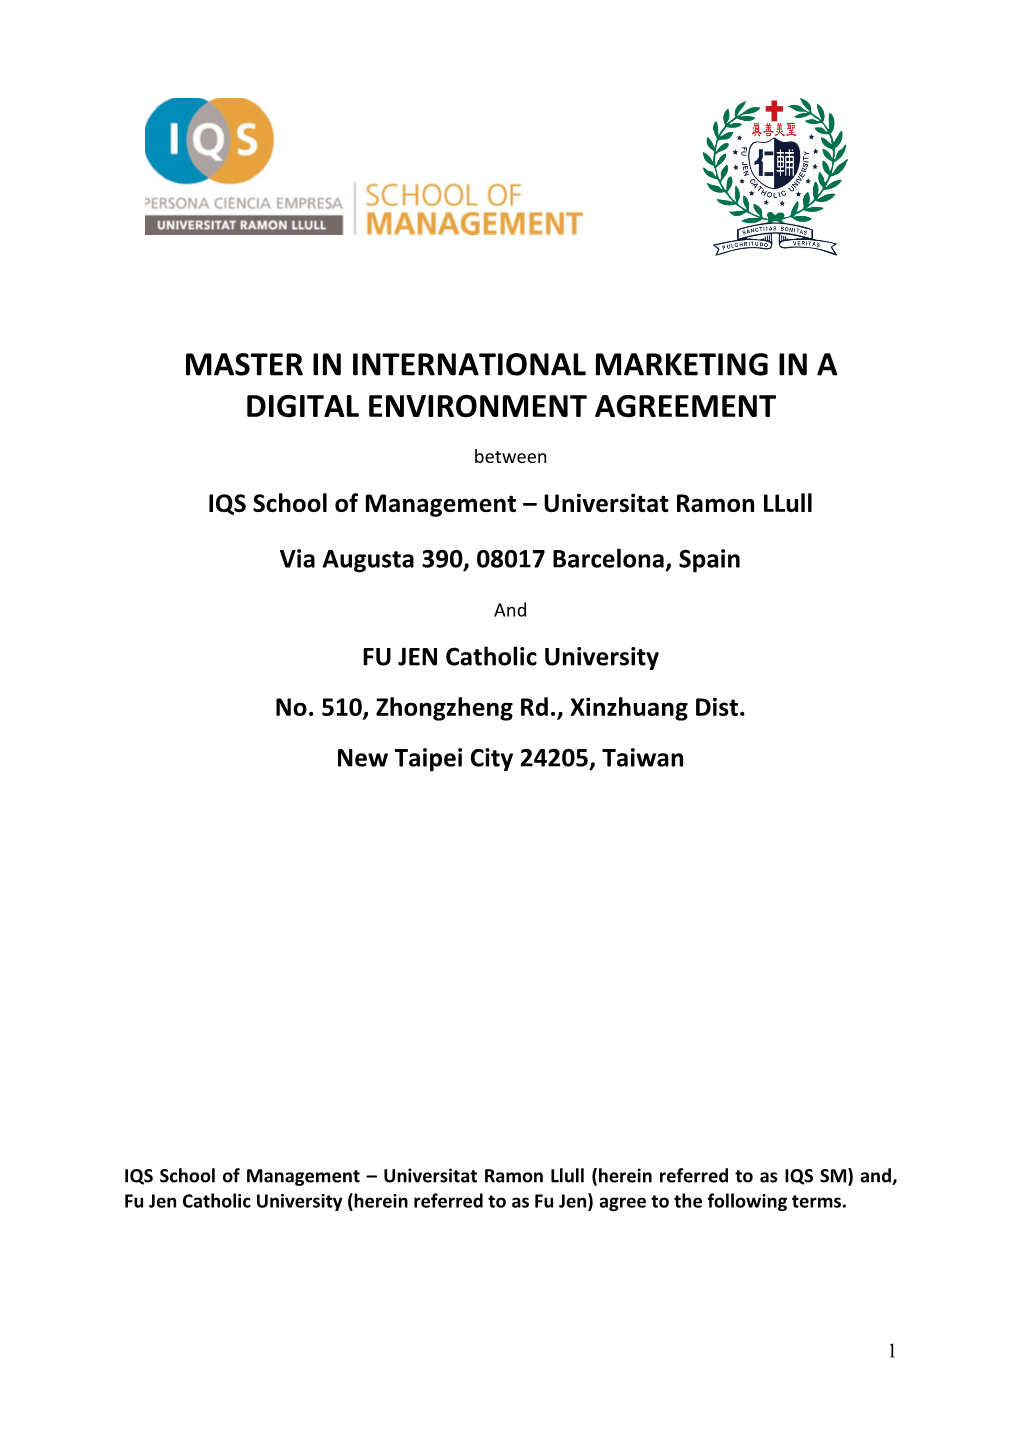 Master in International Marketing in a Digital Environment Agreement